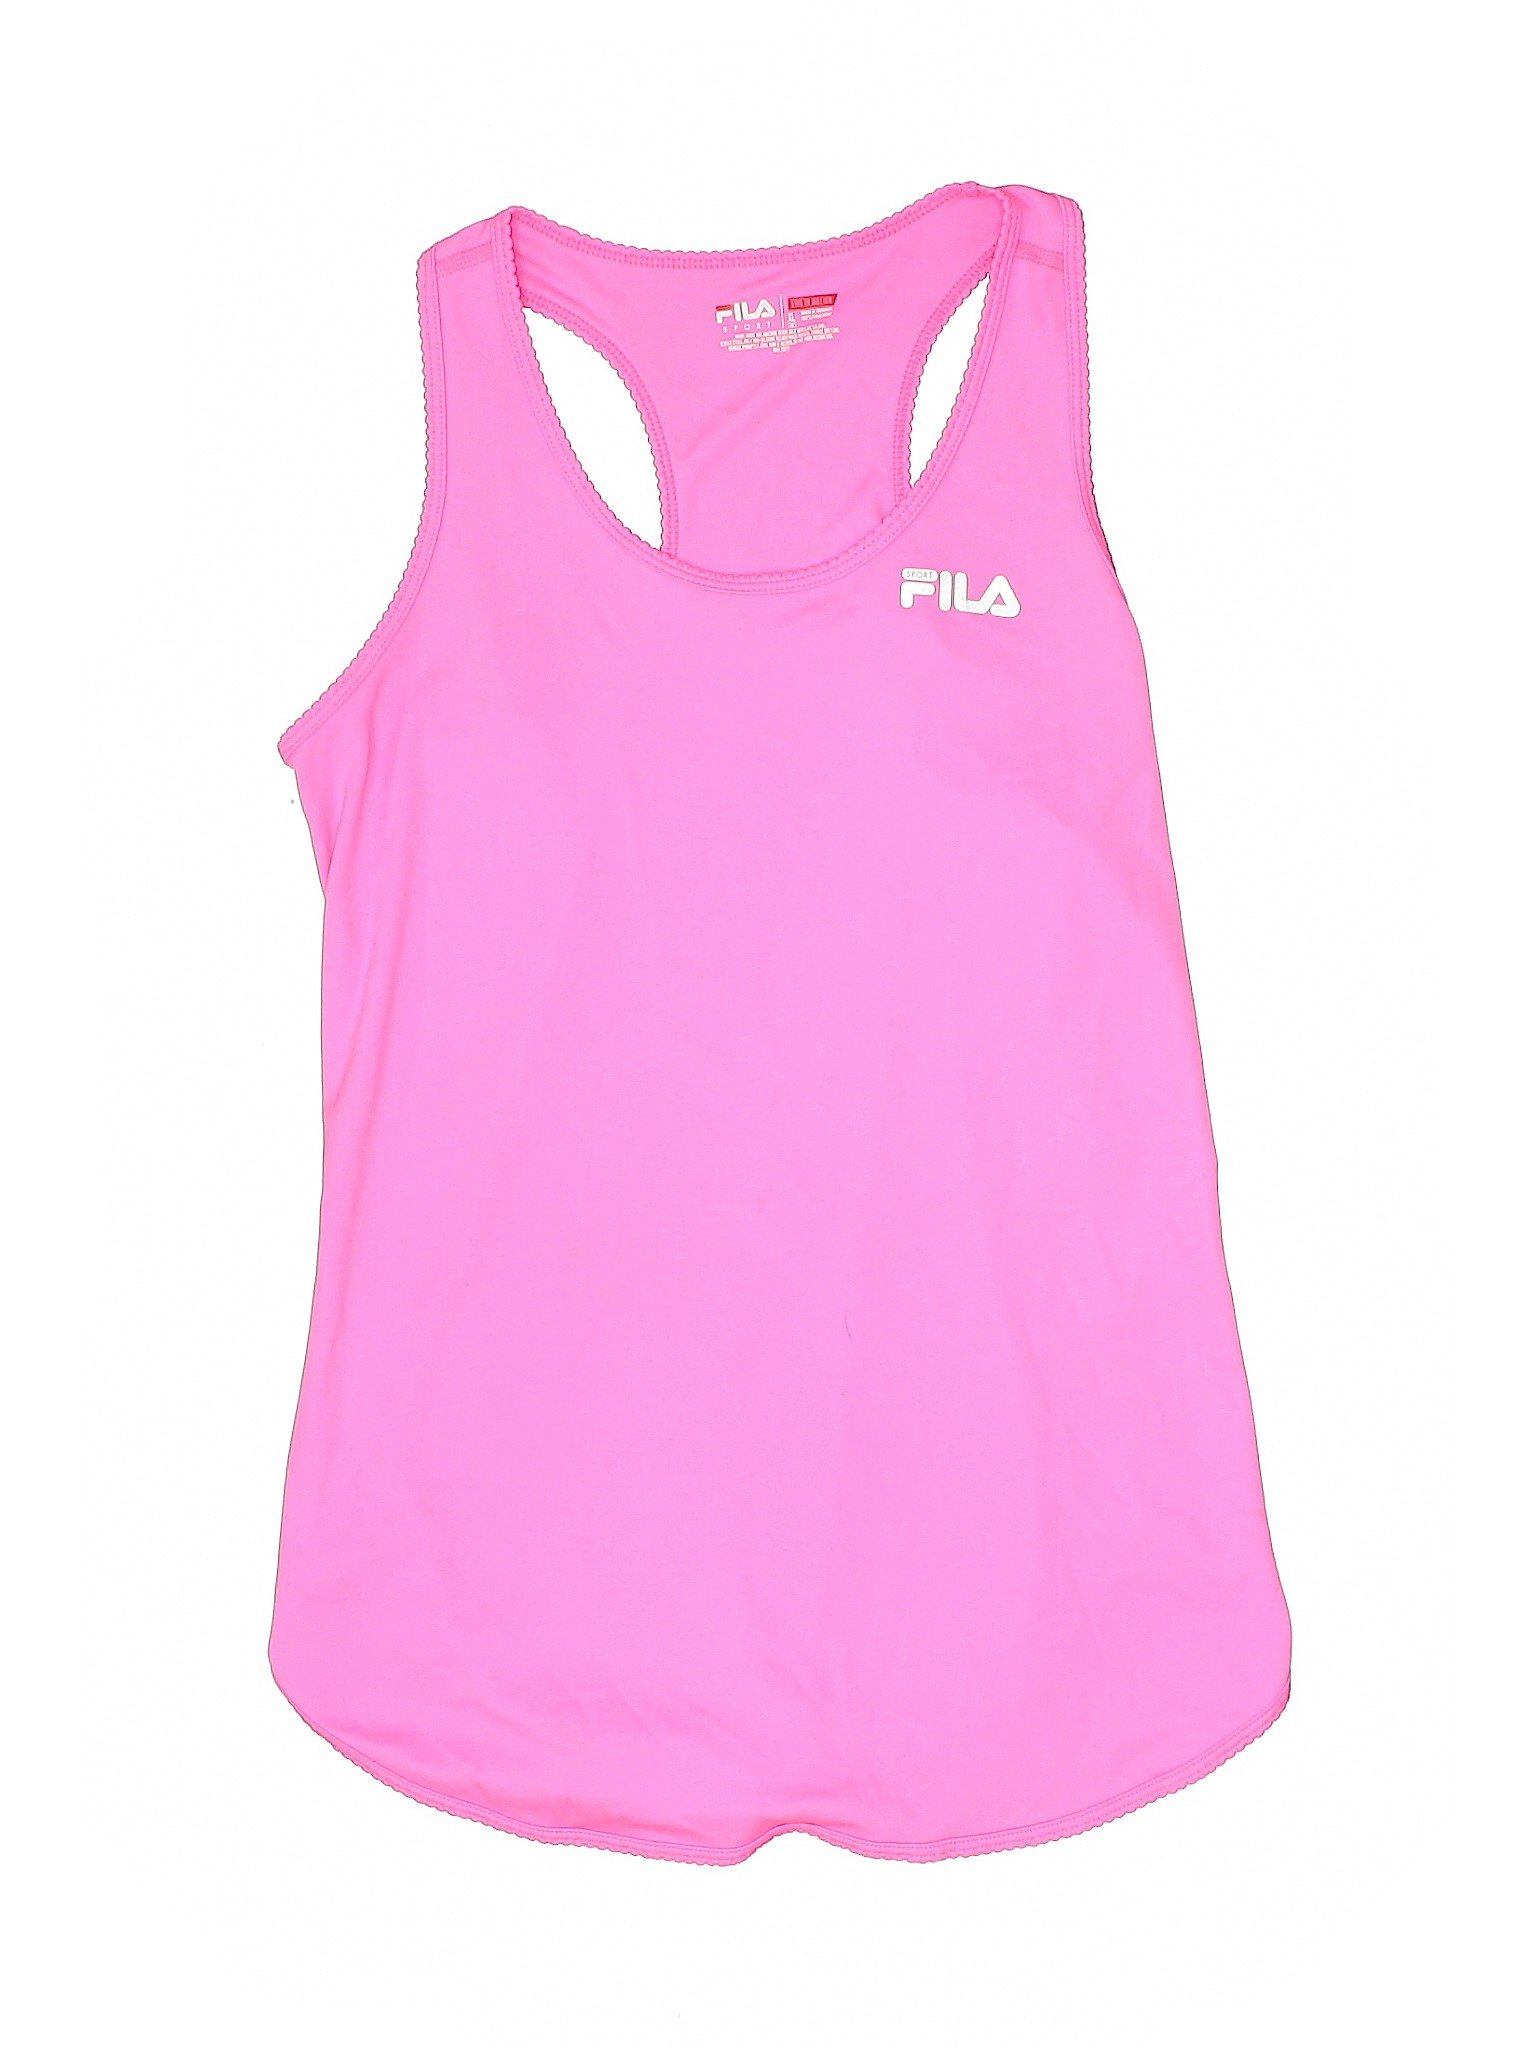 Fila Sport Girls Pink Active Tank 16 | eBay